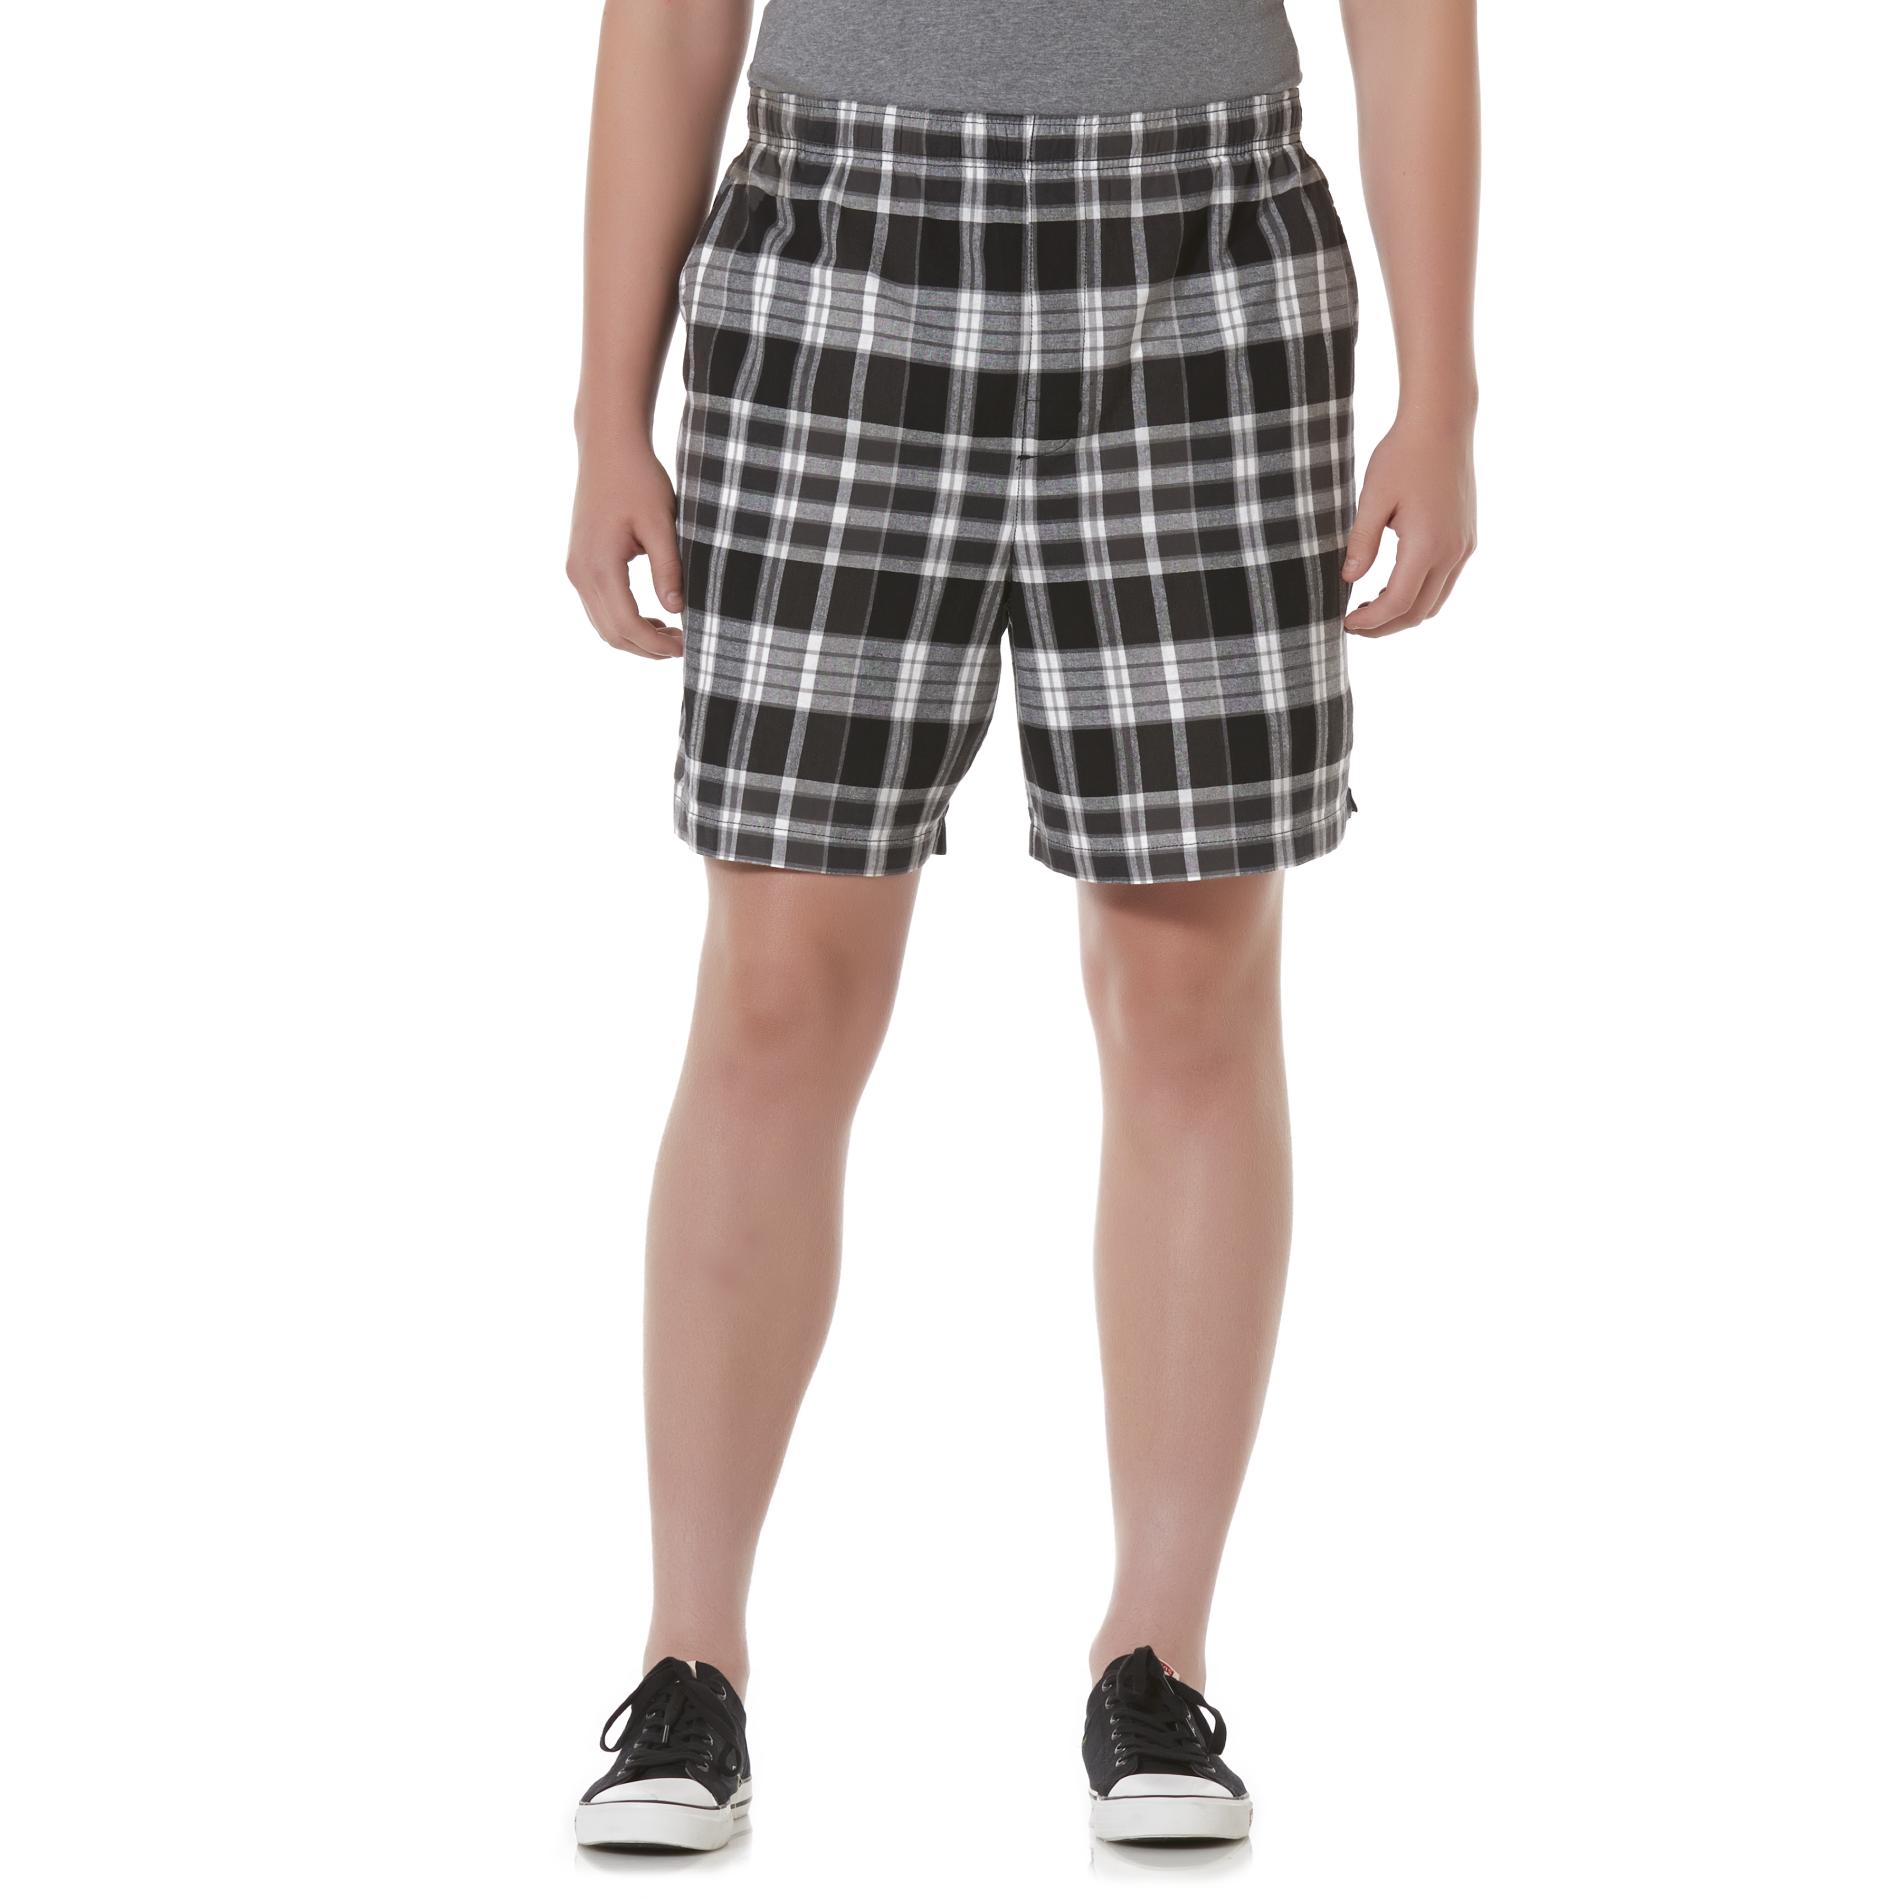 Basic Editions Men's Big & Tall Twill Shorts - Plaid